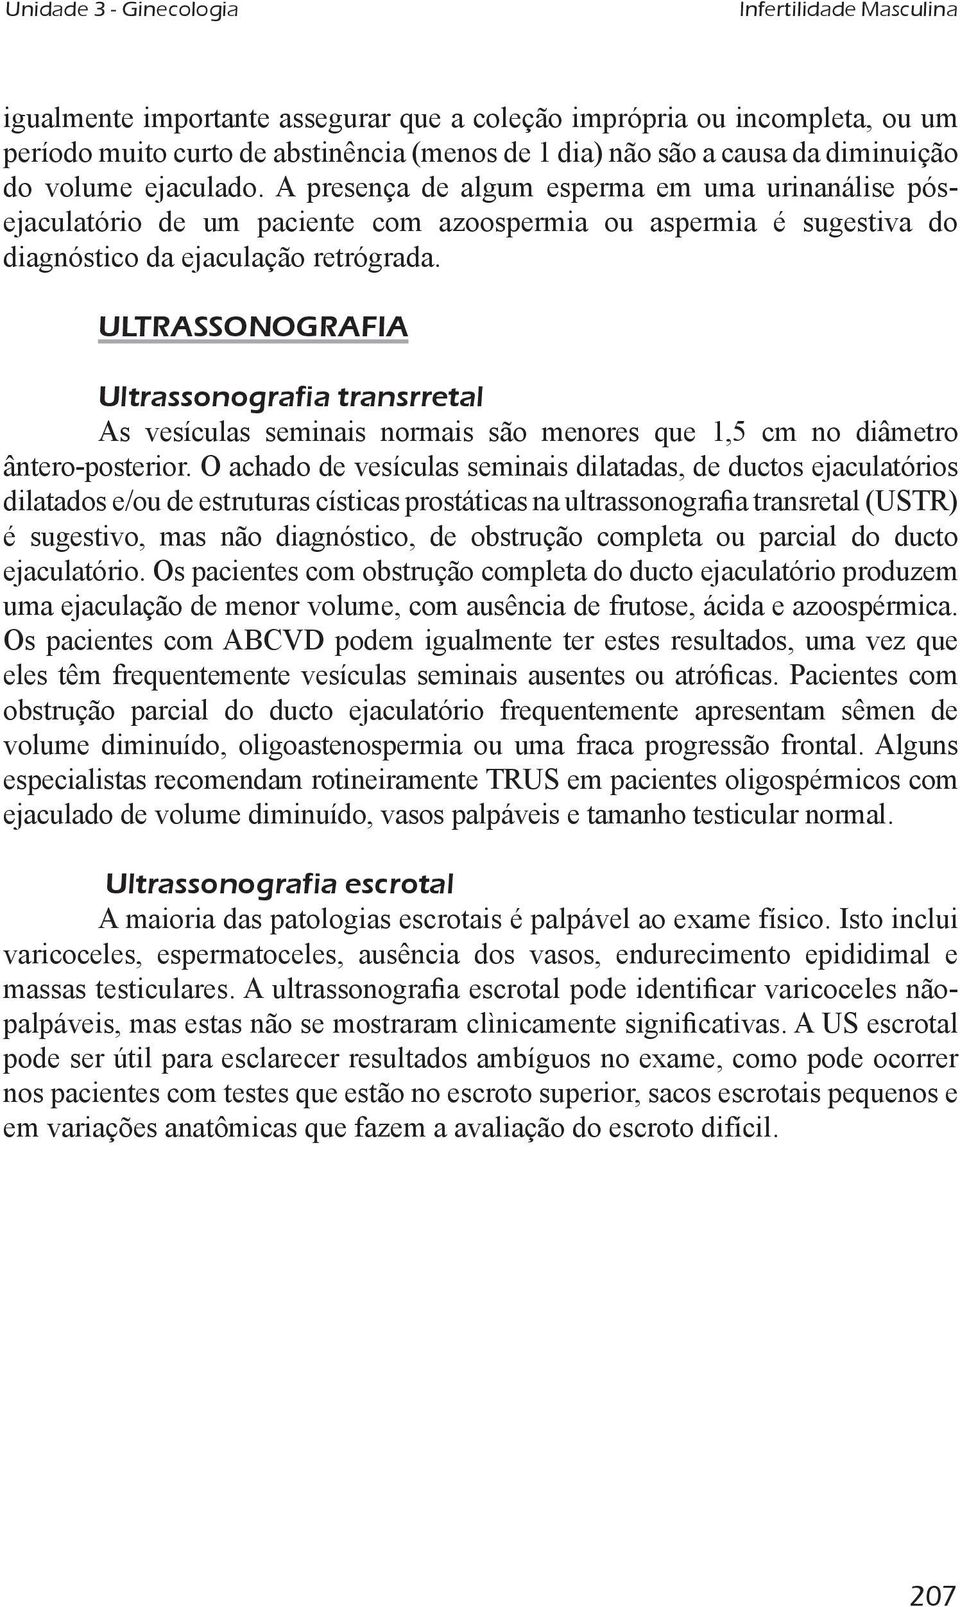 ULTRASSONOGRAfIA Ultrassonografia transrretal As vesículas seminais normais são menores que 1,5 cm no diâmetro ântero-posterior.